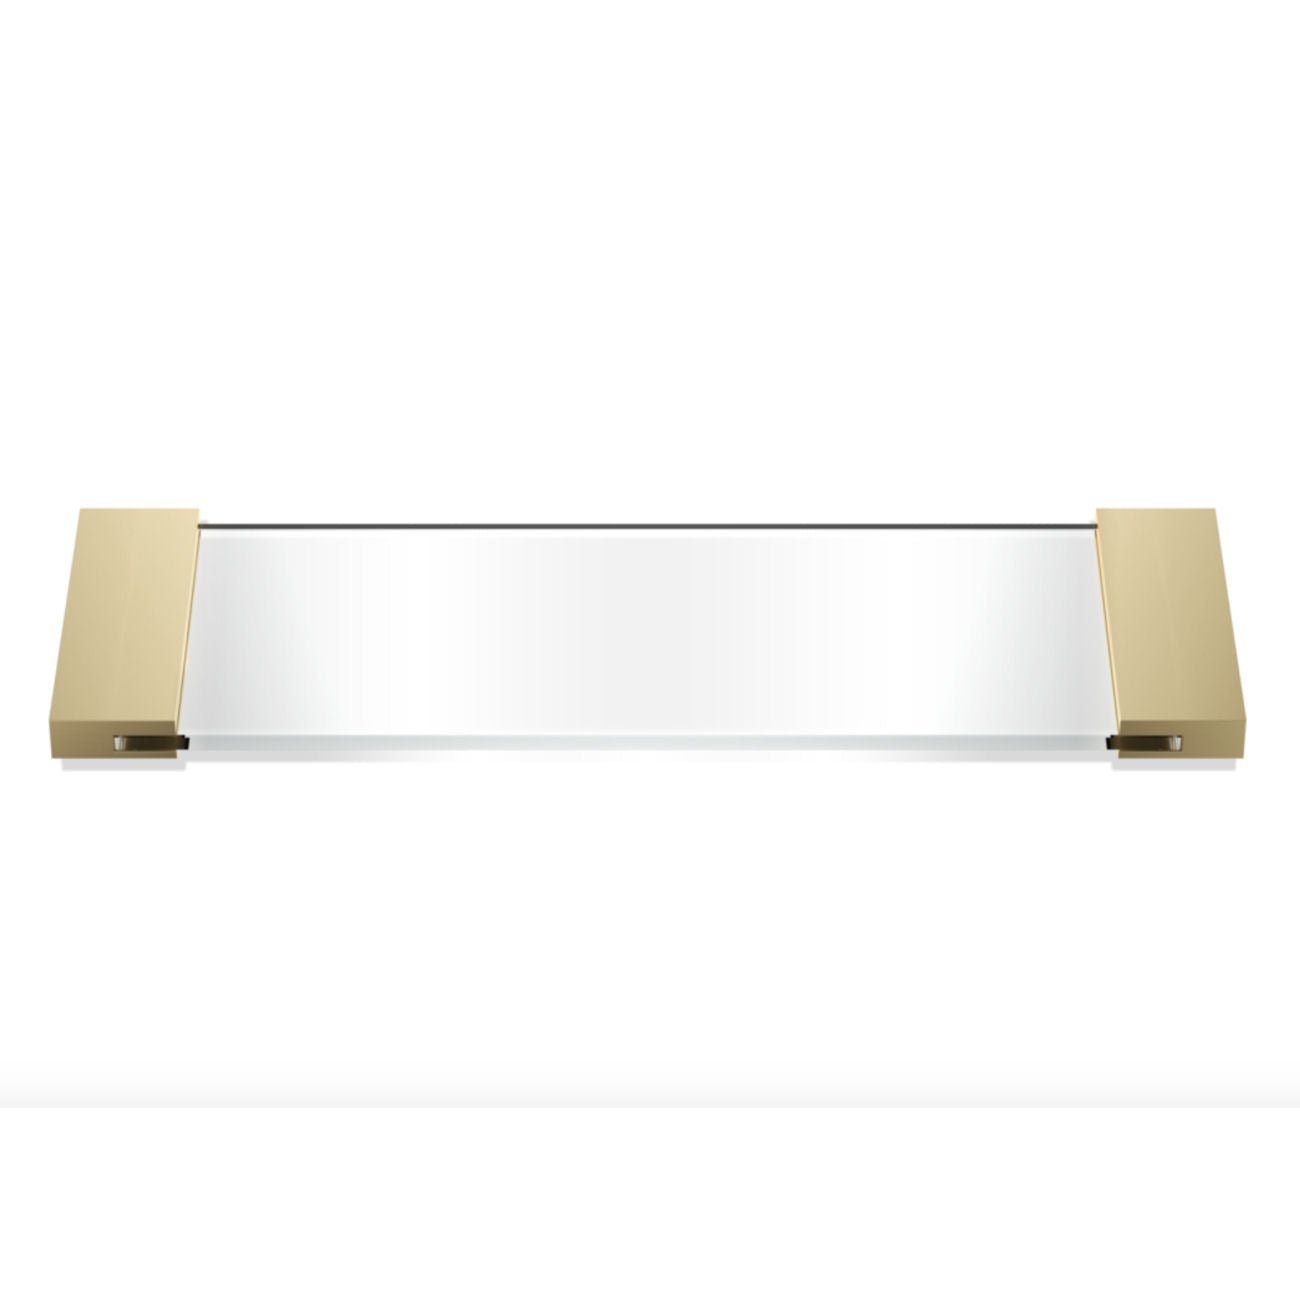 Luxury Matt Gold Bathroom Tray by Decor Walther - |VESIMI Design|